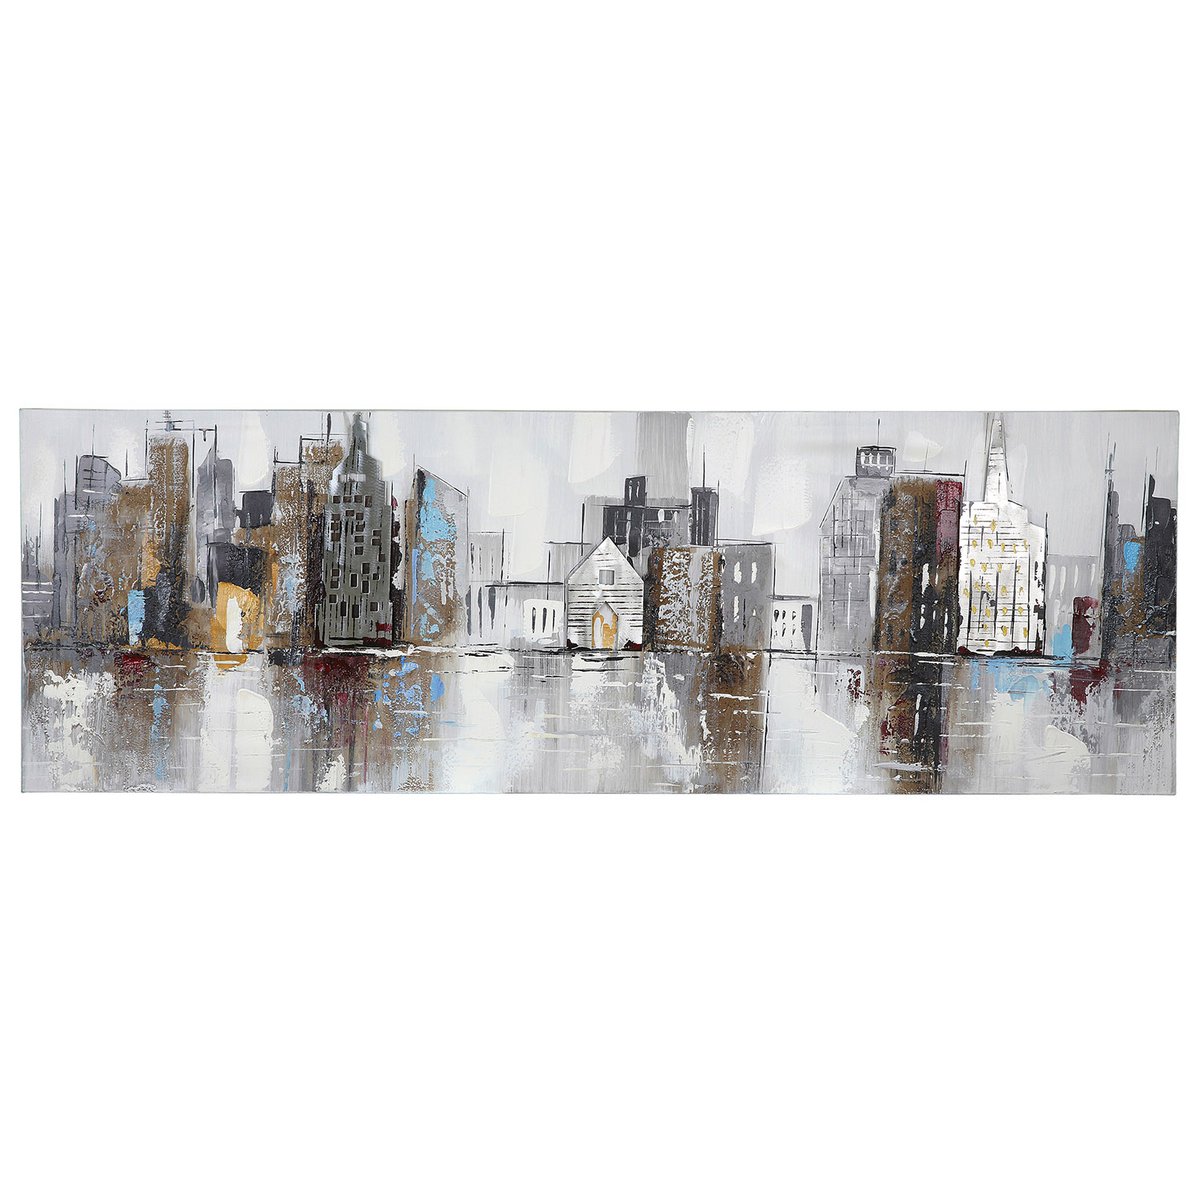 Aluminium/Holz Bild Gemälde "City"